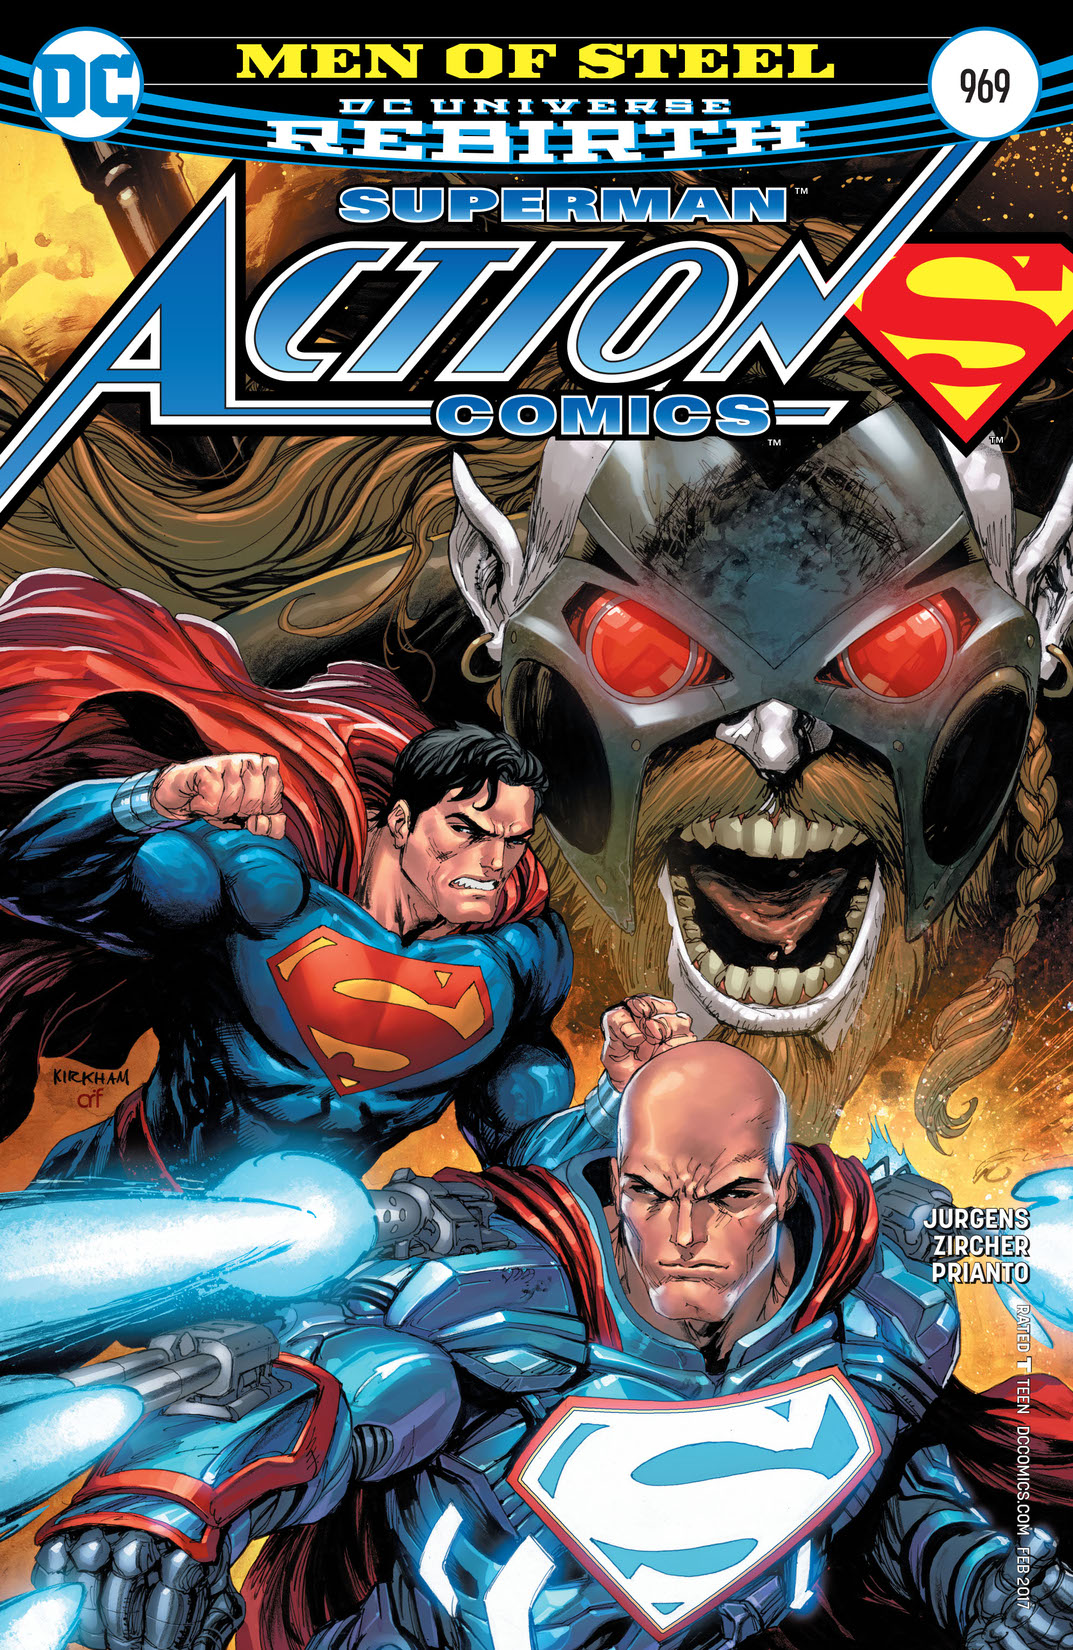 Action Comics (2016-) #969 preview images